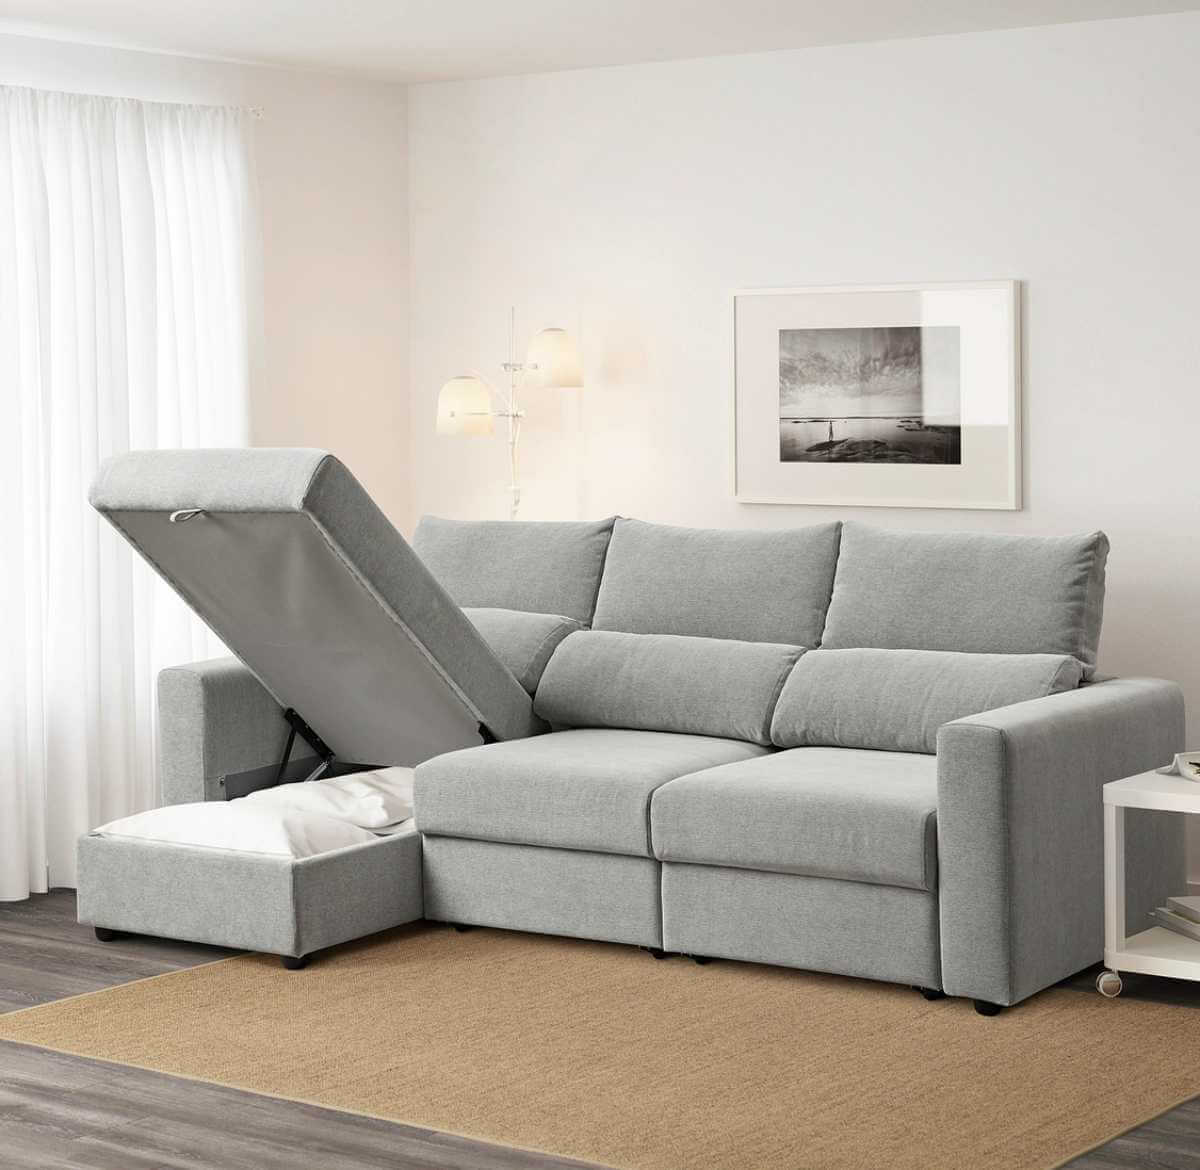 Sofá de Ikea